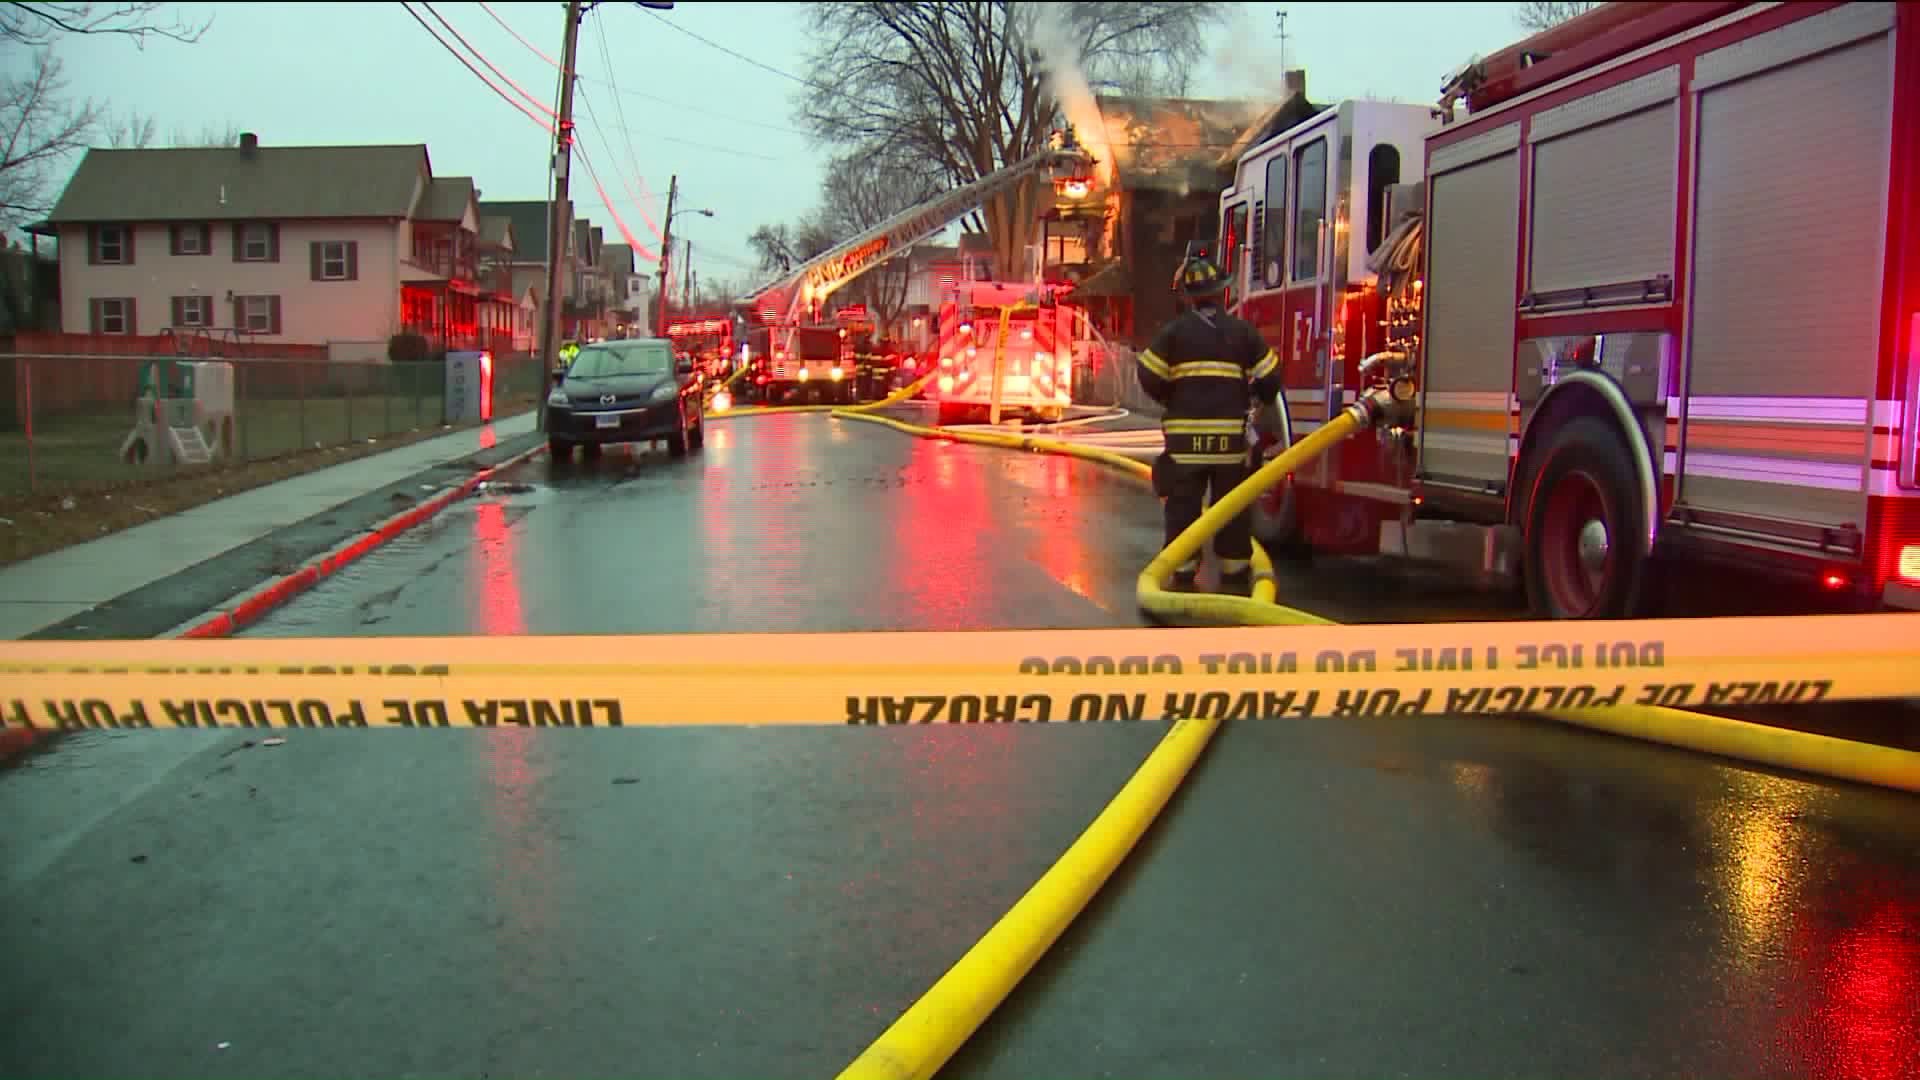 Fire on Brook Street in Hartford